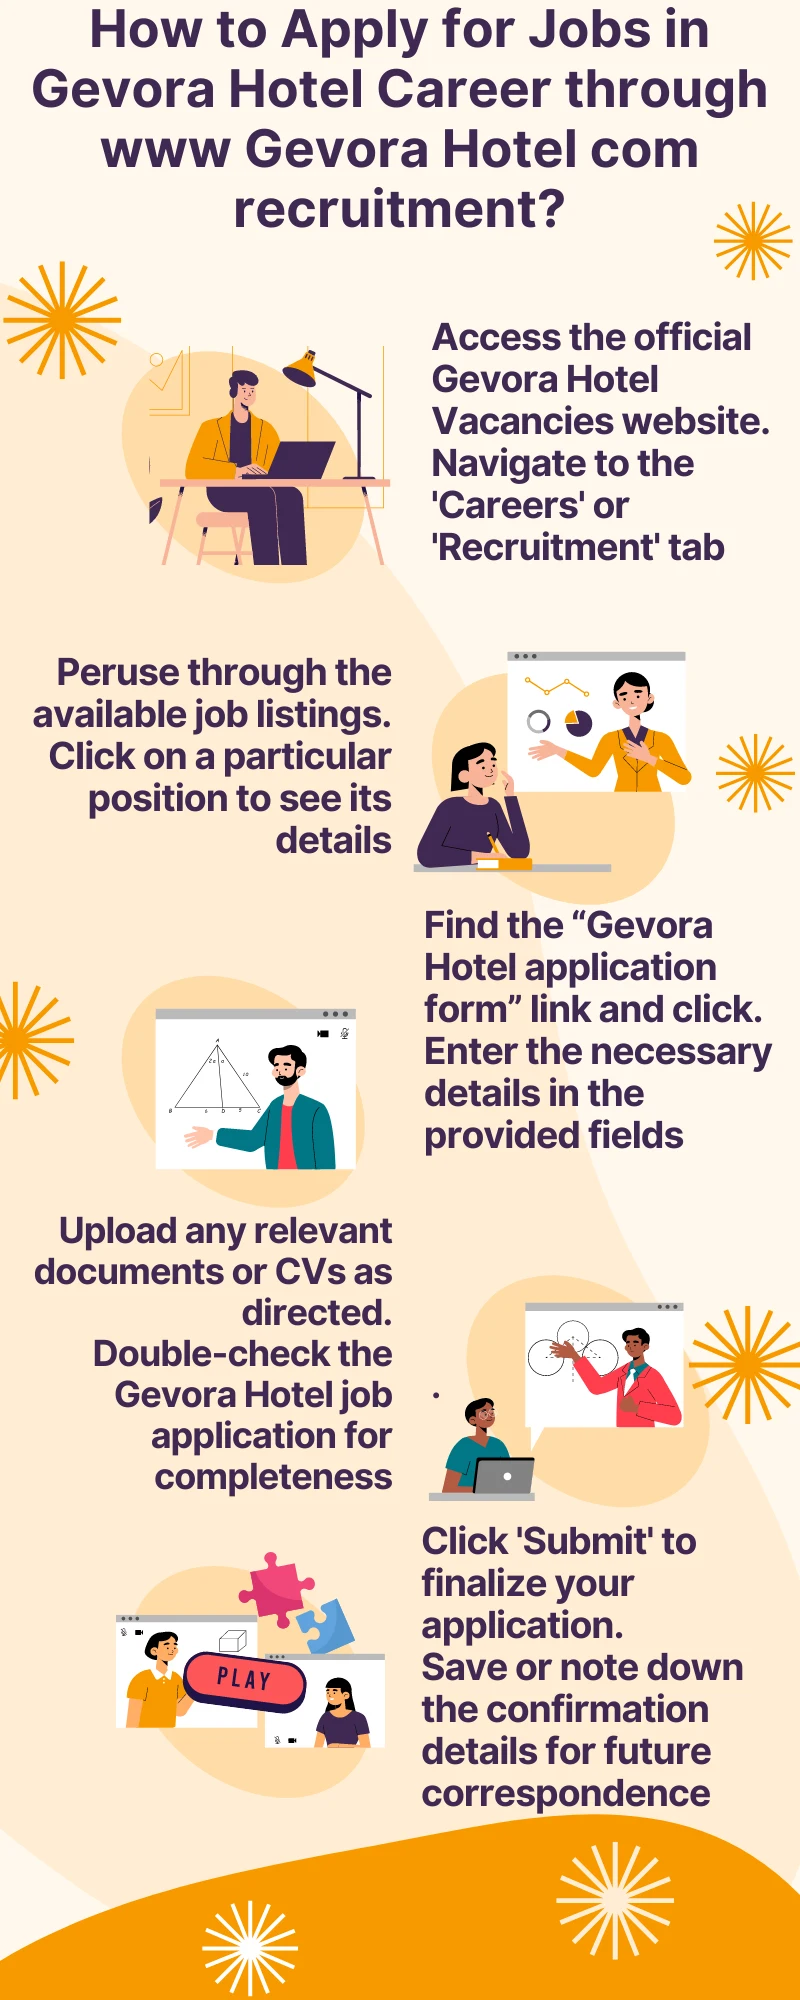 How to Apply for Jobs in Gevora Hotel Career through www Gevora Hotel com recruitment?